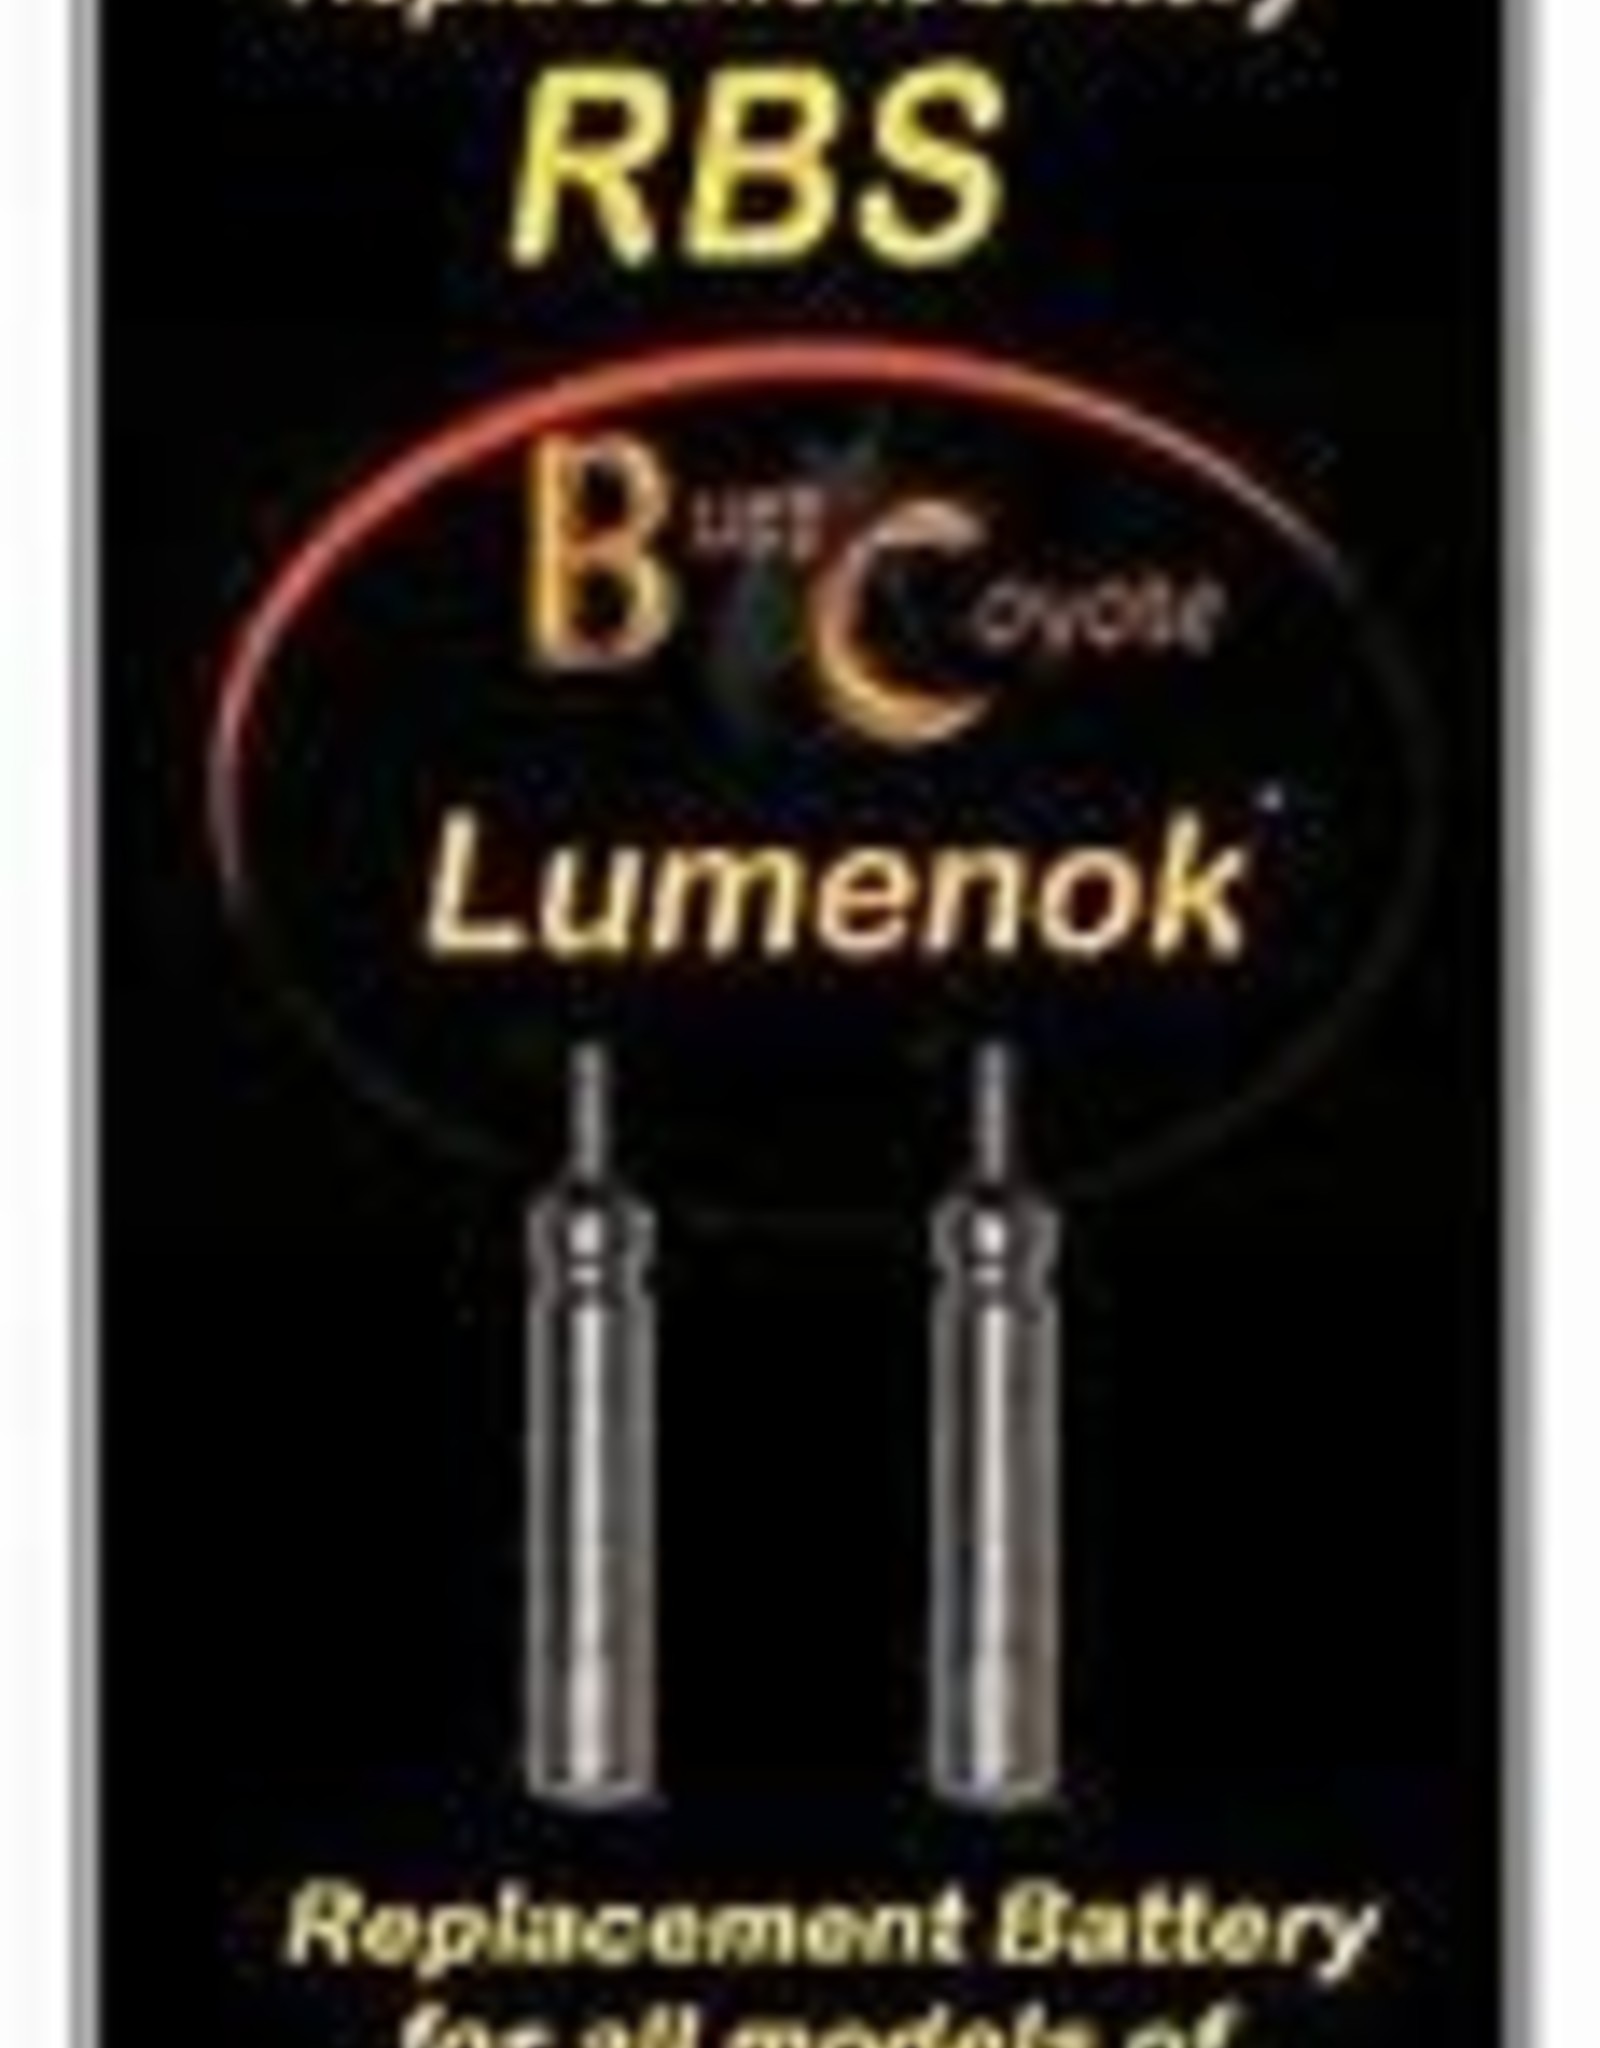 Burt Coyote Company Lumenok Replacement Battery